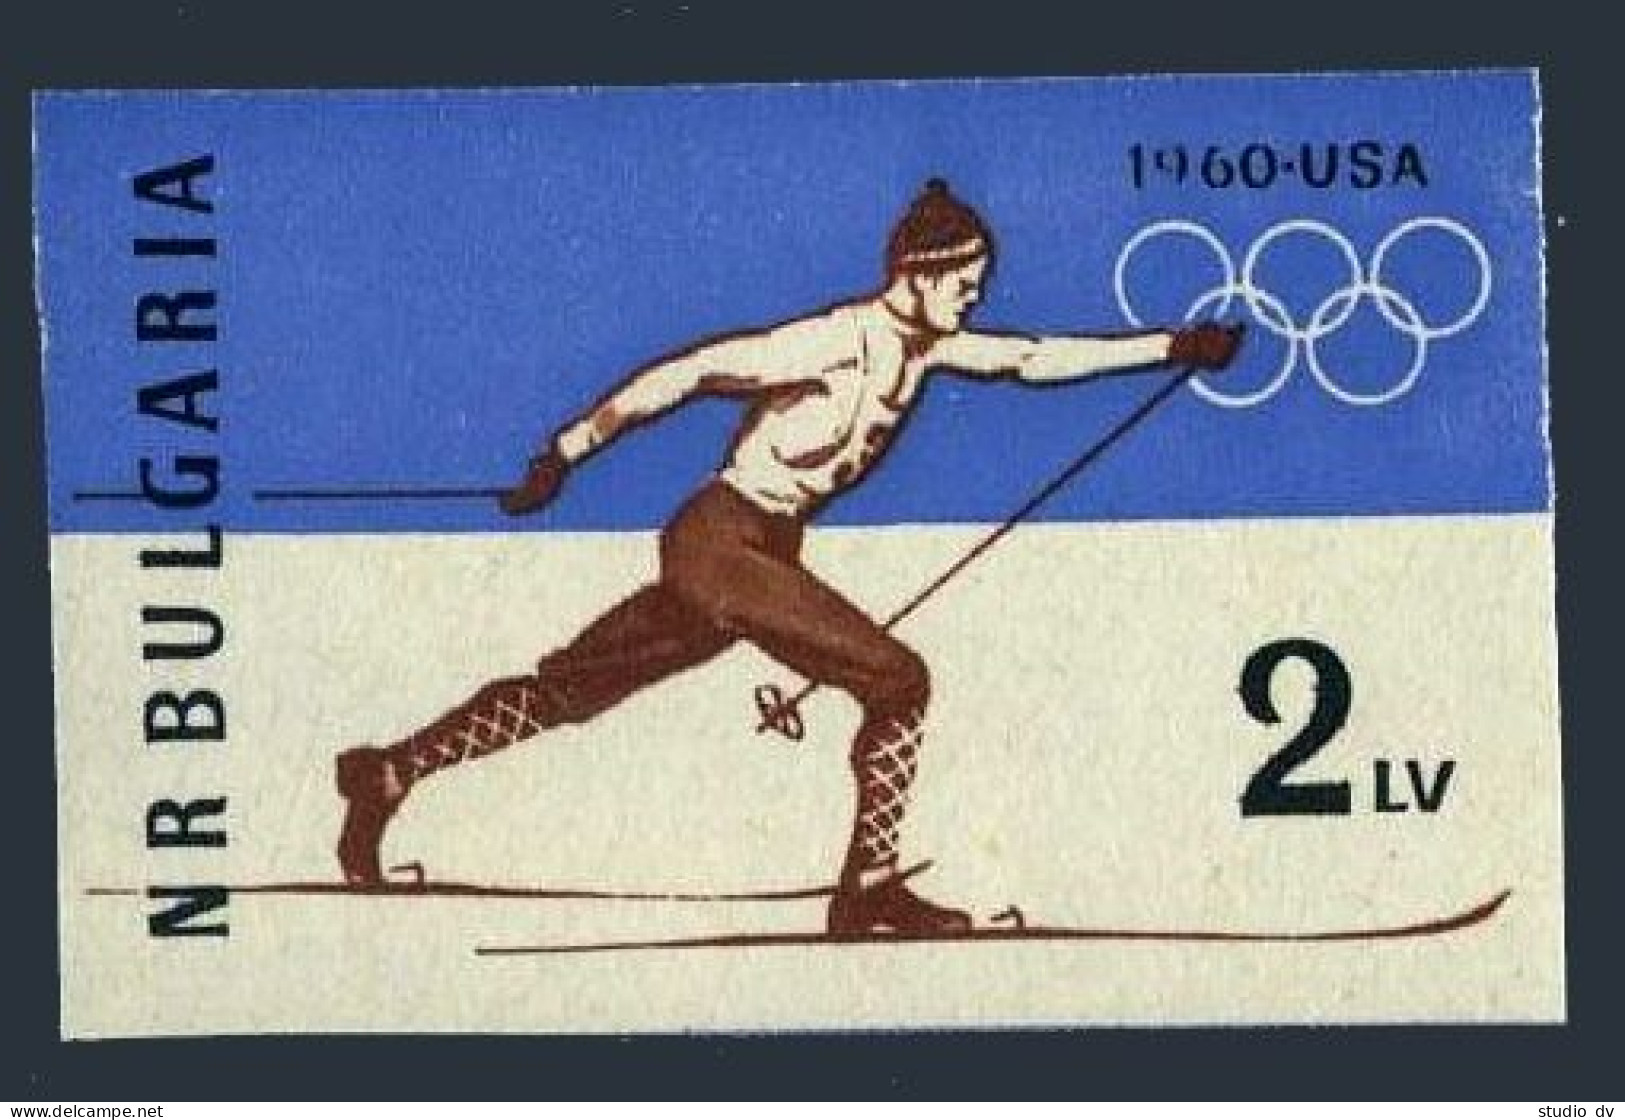 Bulgaria 1094 Imperf, MNH. Michel 1153B. Olympics Squaw Valley-1960. Skier. - Nuovi